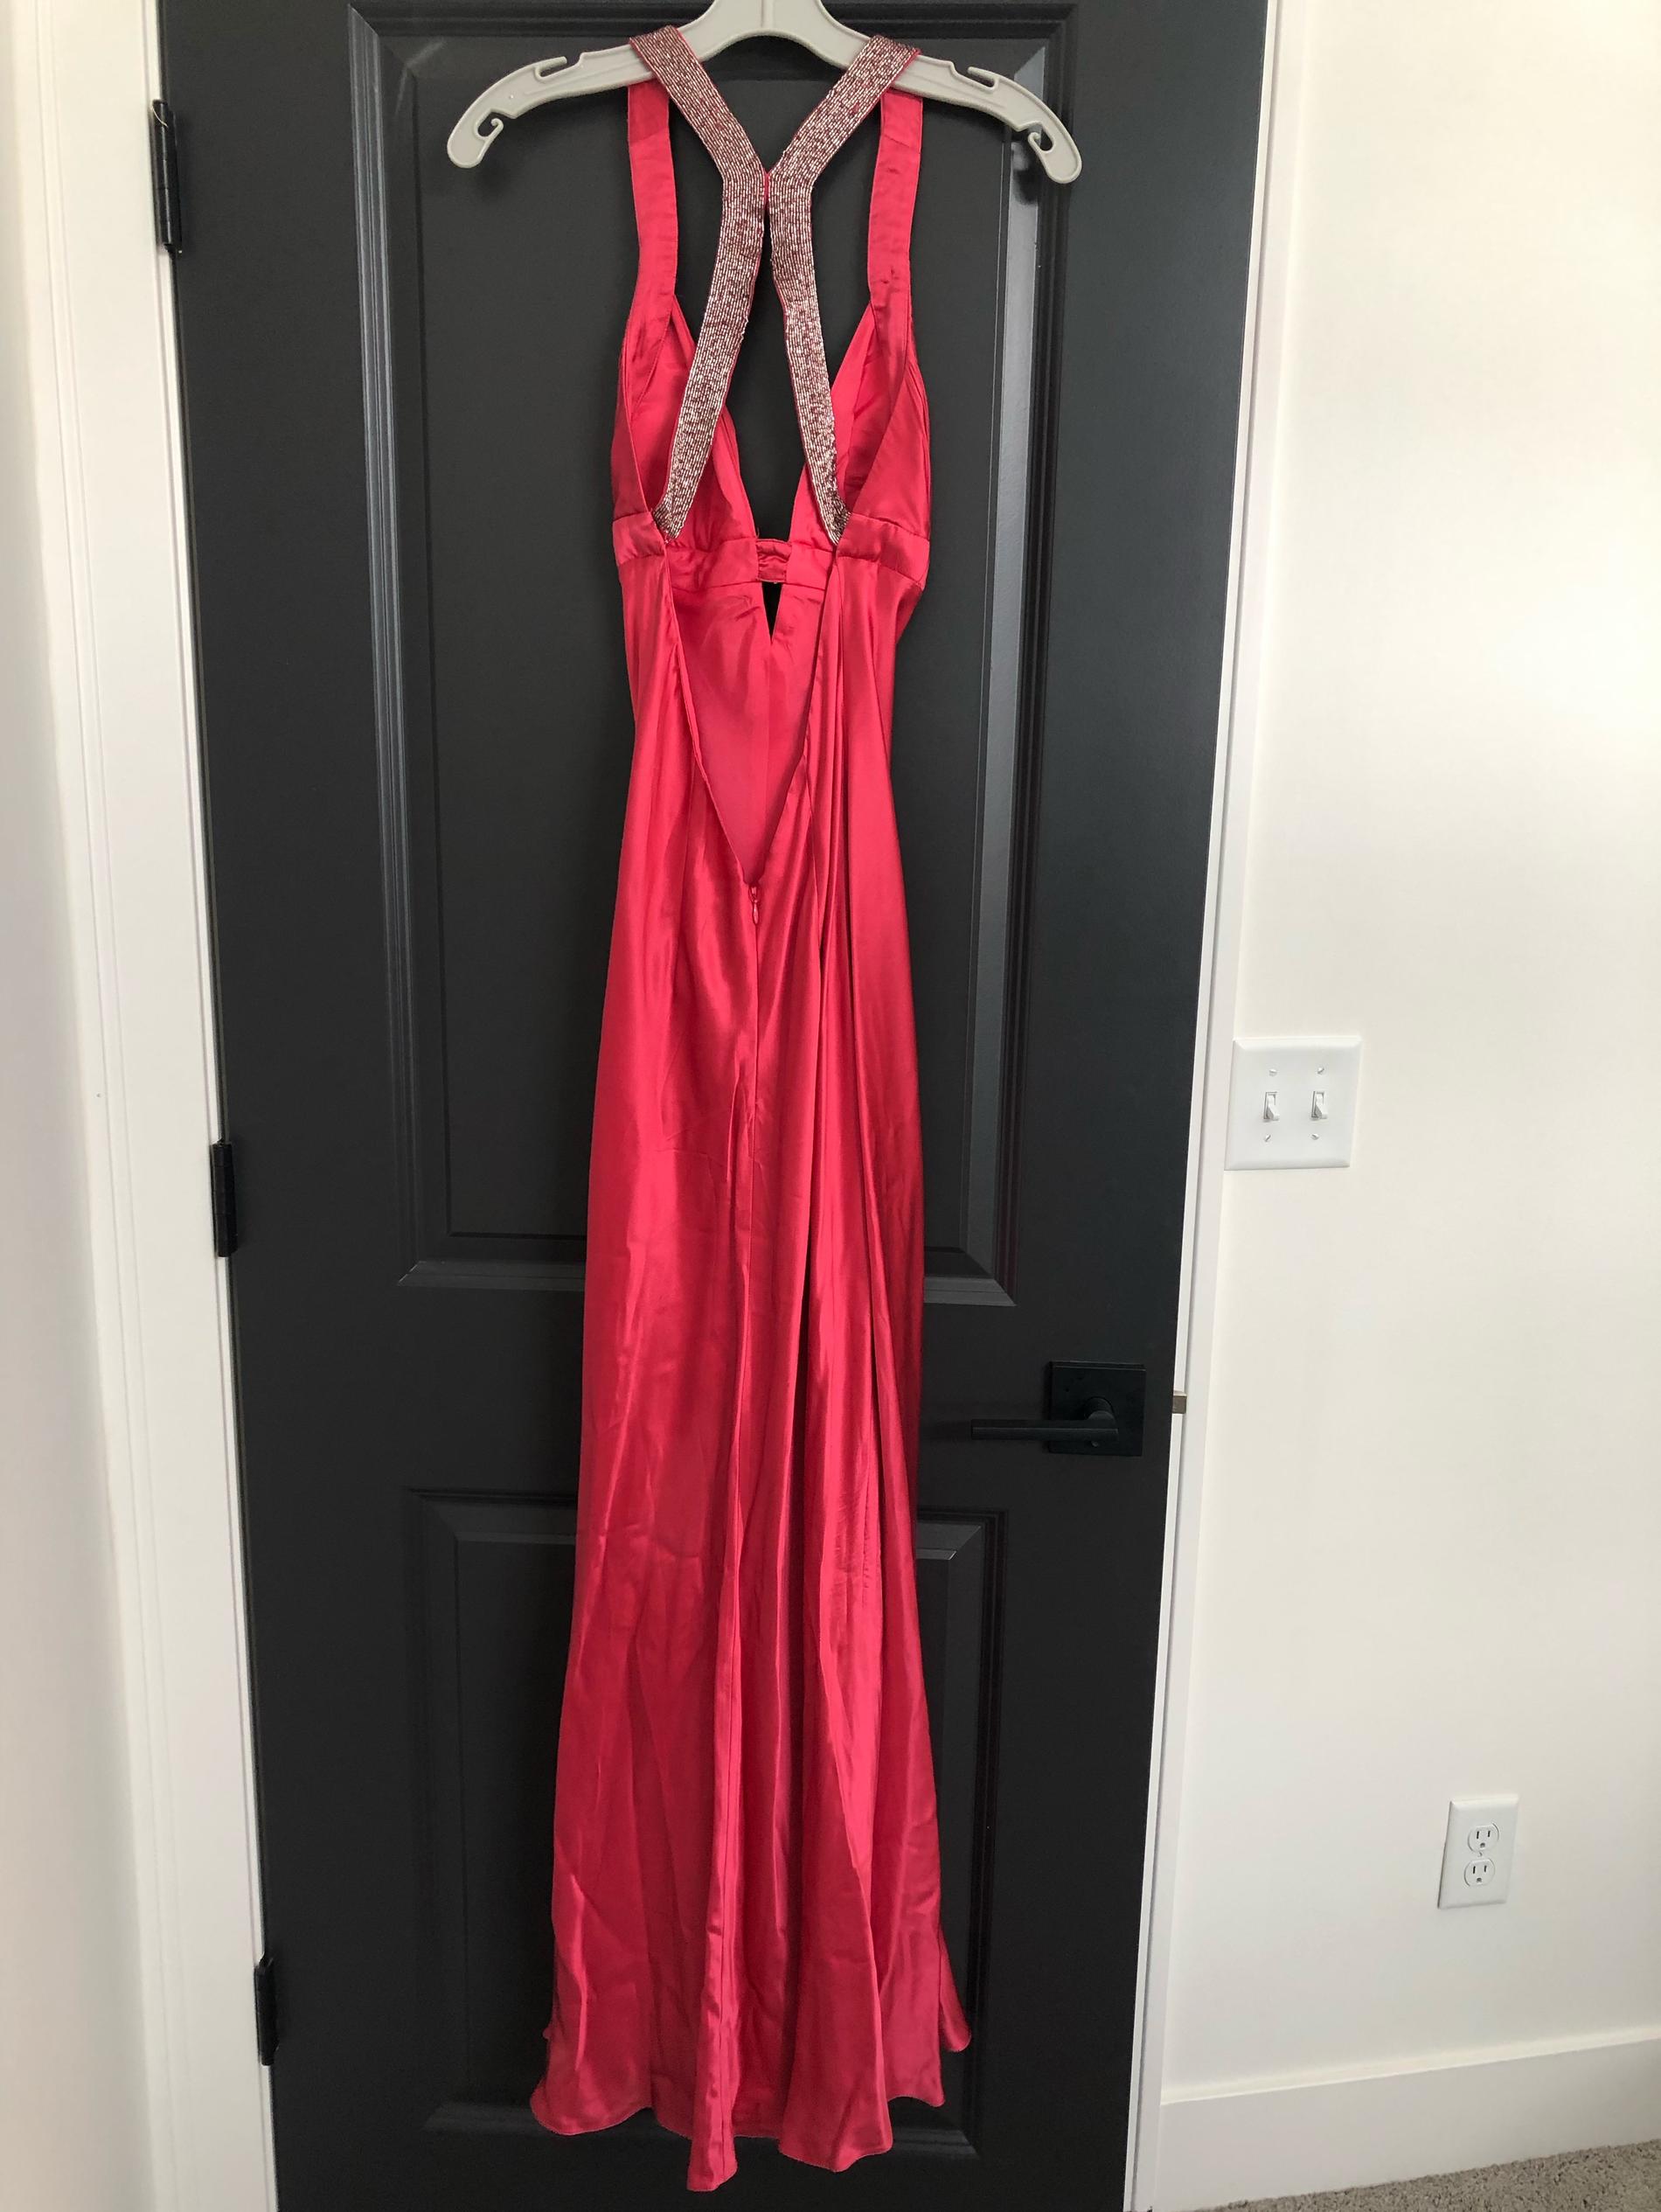 Adrian Mattox Niteline Size 6 Prom Satin Pink Cocktail Dress